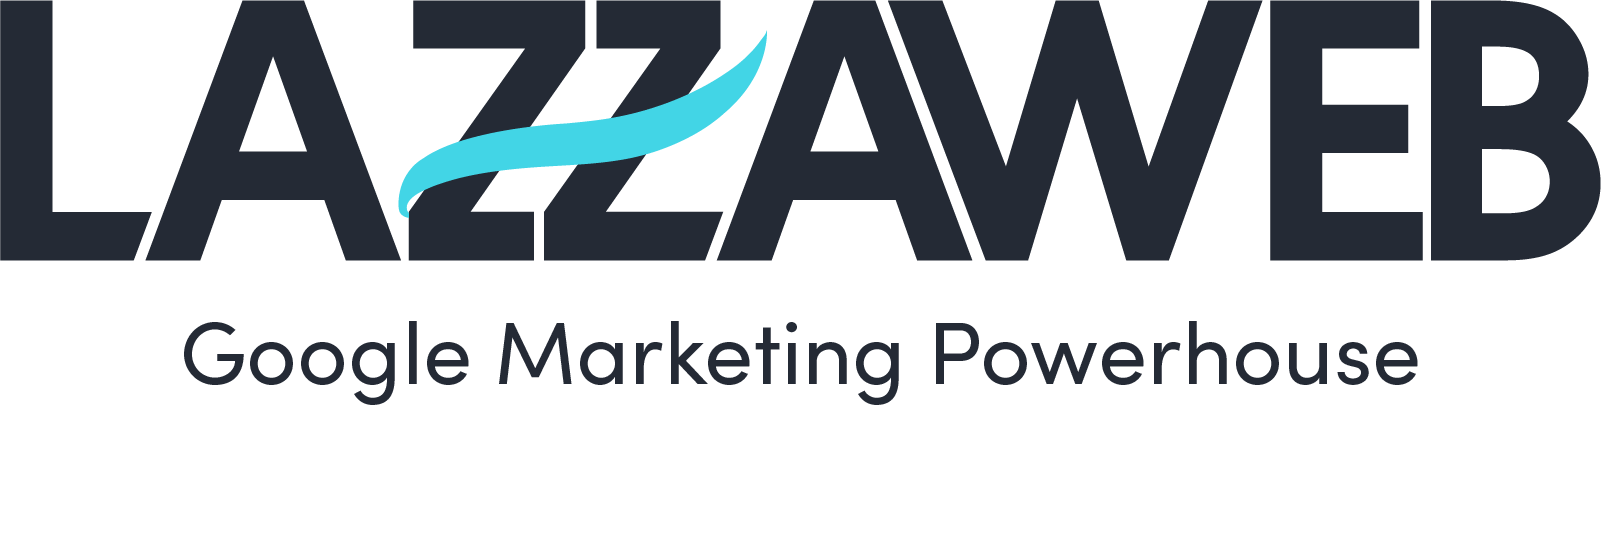 Lazzaweb logo